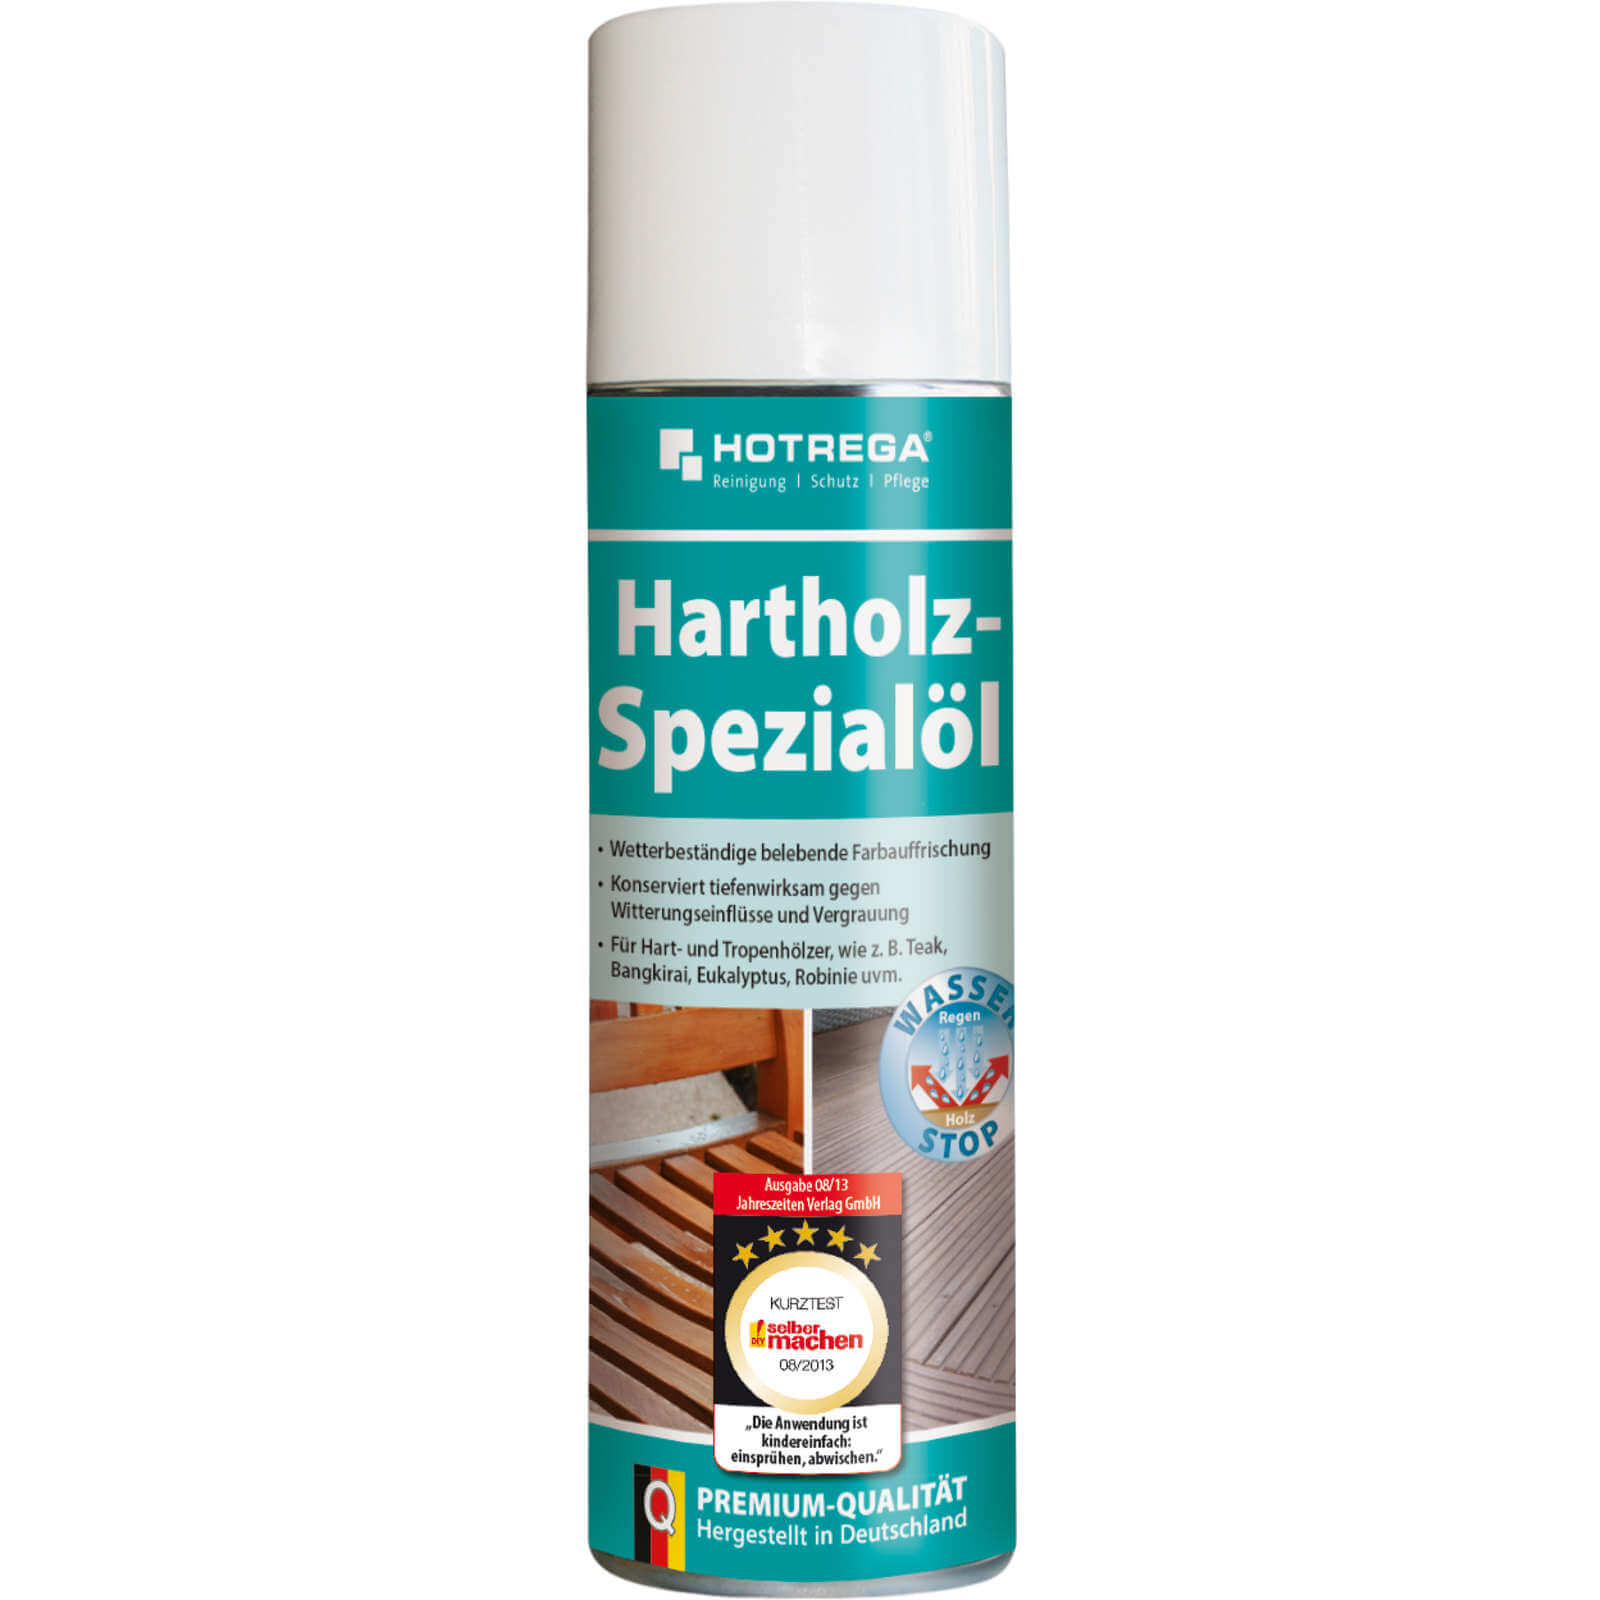 HOTREGA Hartholz Spezialöl Hartholzöl Holzpflege Holzöl Holzpflegemittel 300ml von HOTREGA